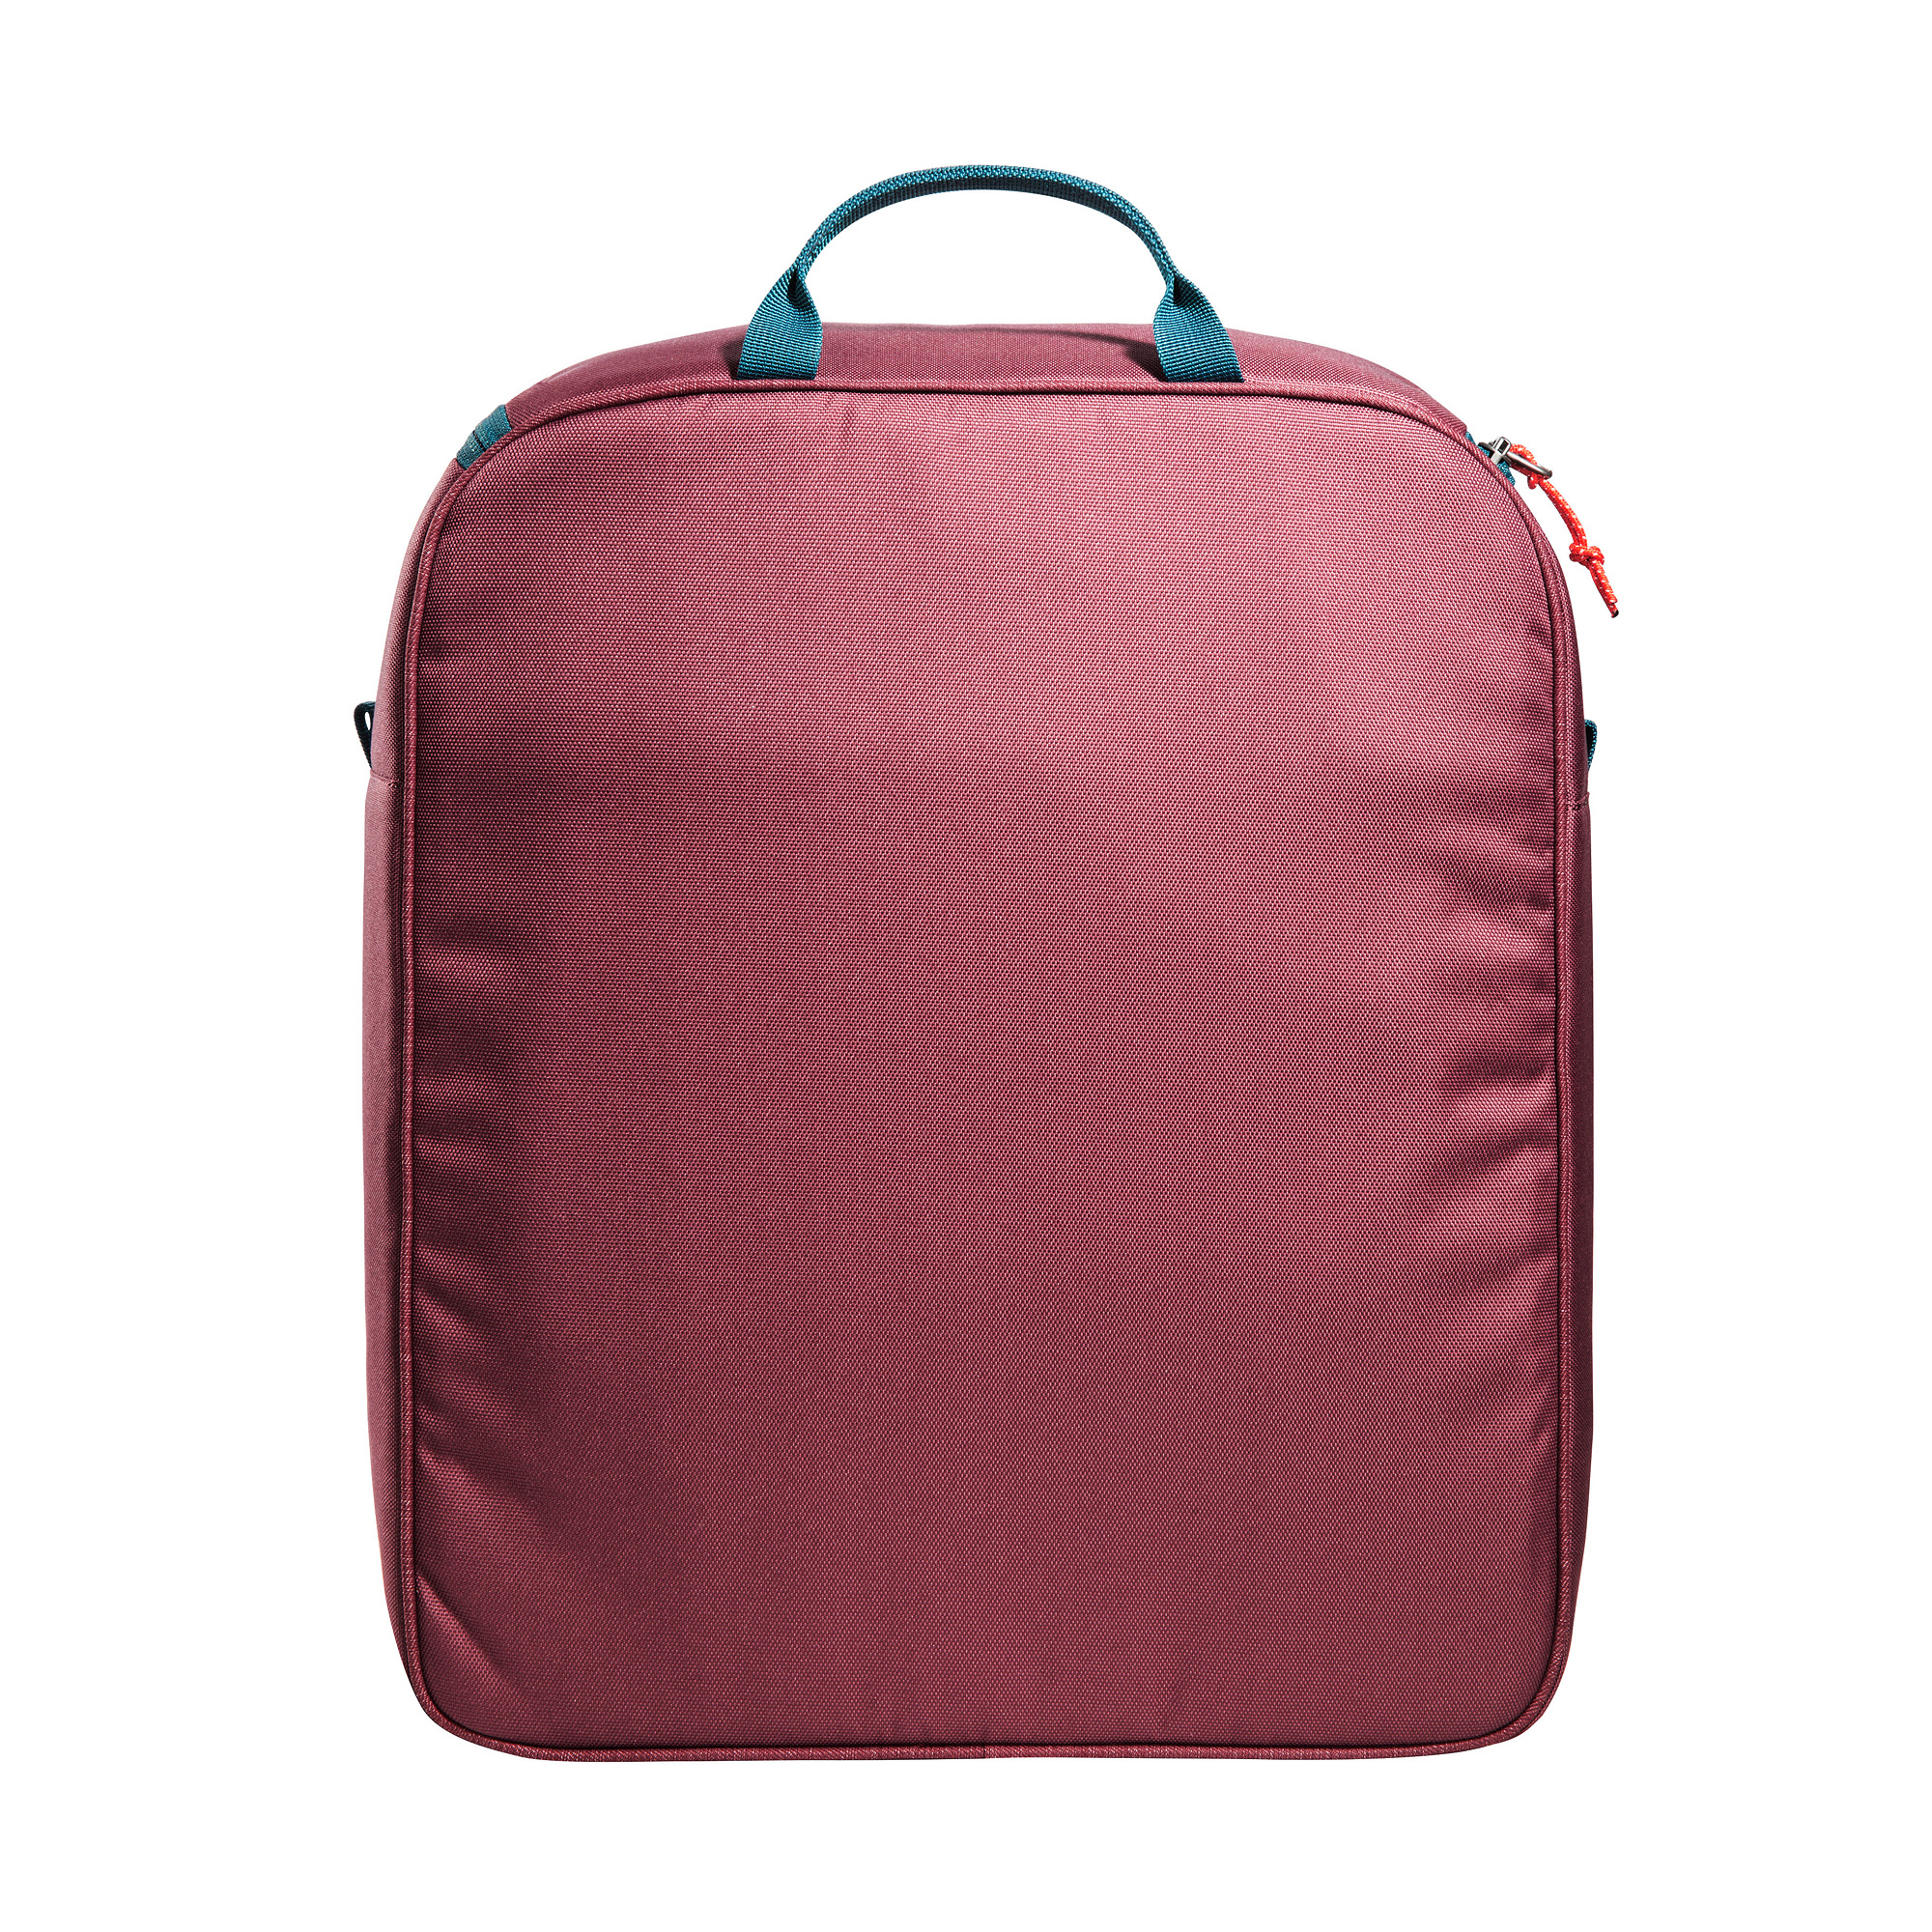 Tatonka Cooler Bag M bordeaux red rot Sonstige Taschen 4013236336320